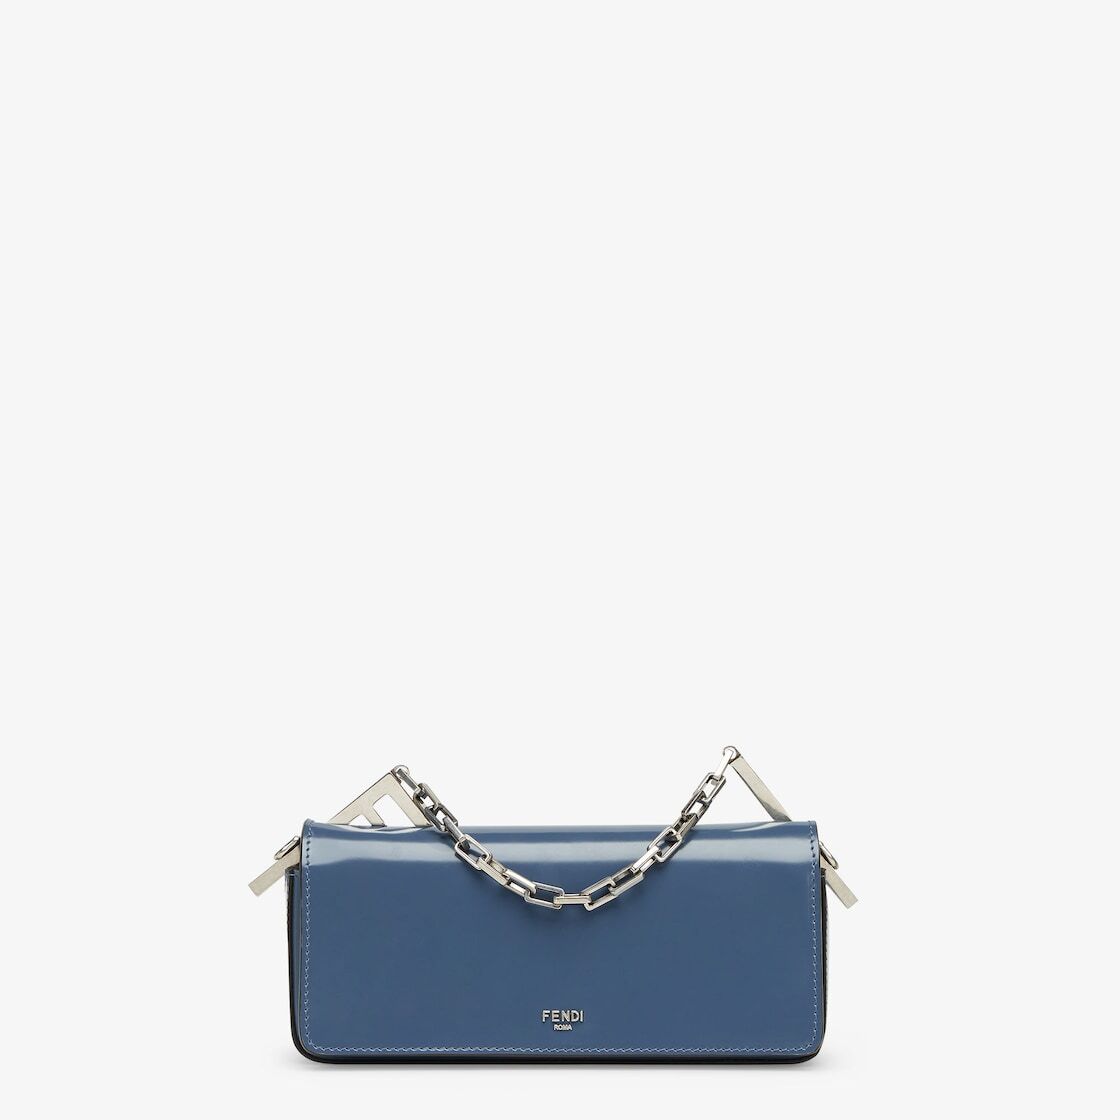 Fendi First Sight - Blue Leather Mini Bag